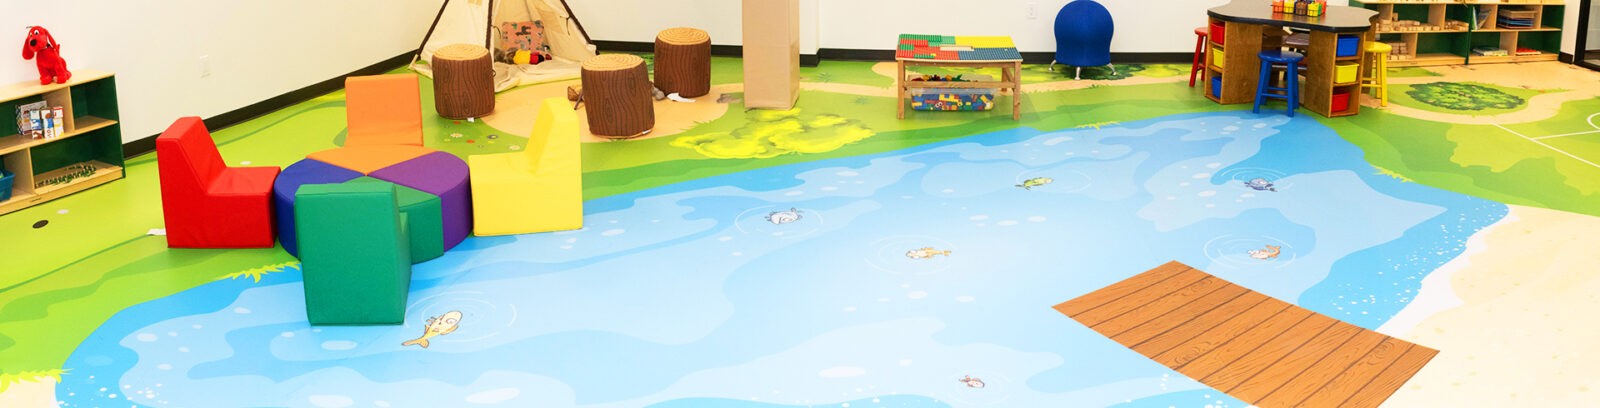 printed flooring in a kids space. flooring looks like a pond.